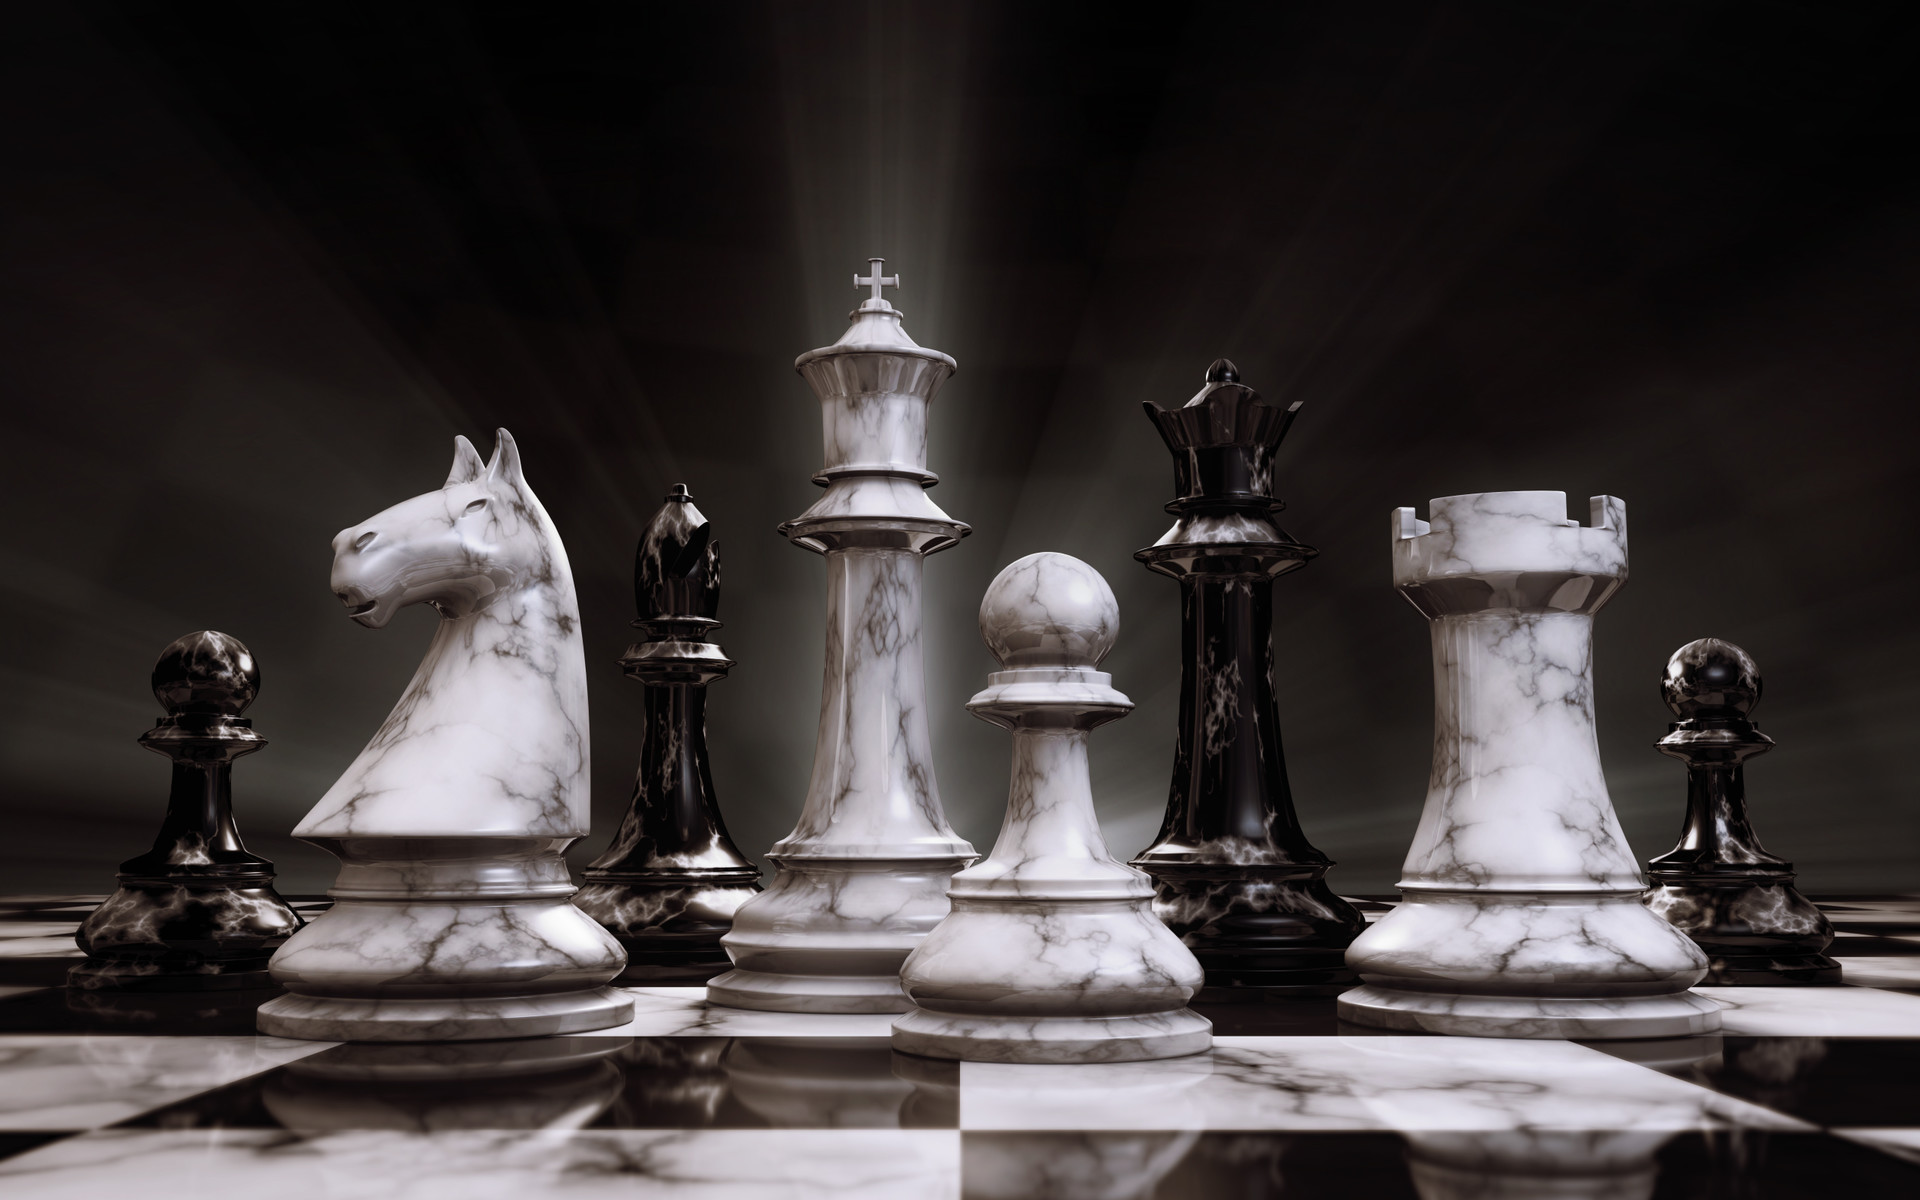 Desktop Wallpapers: chess board wallpapers image